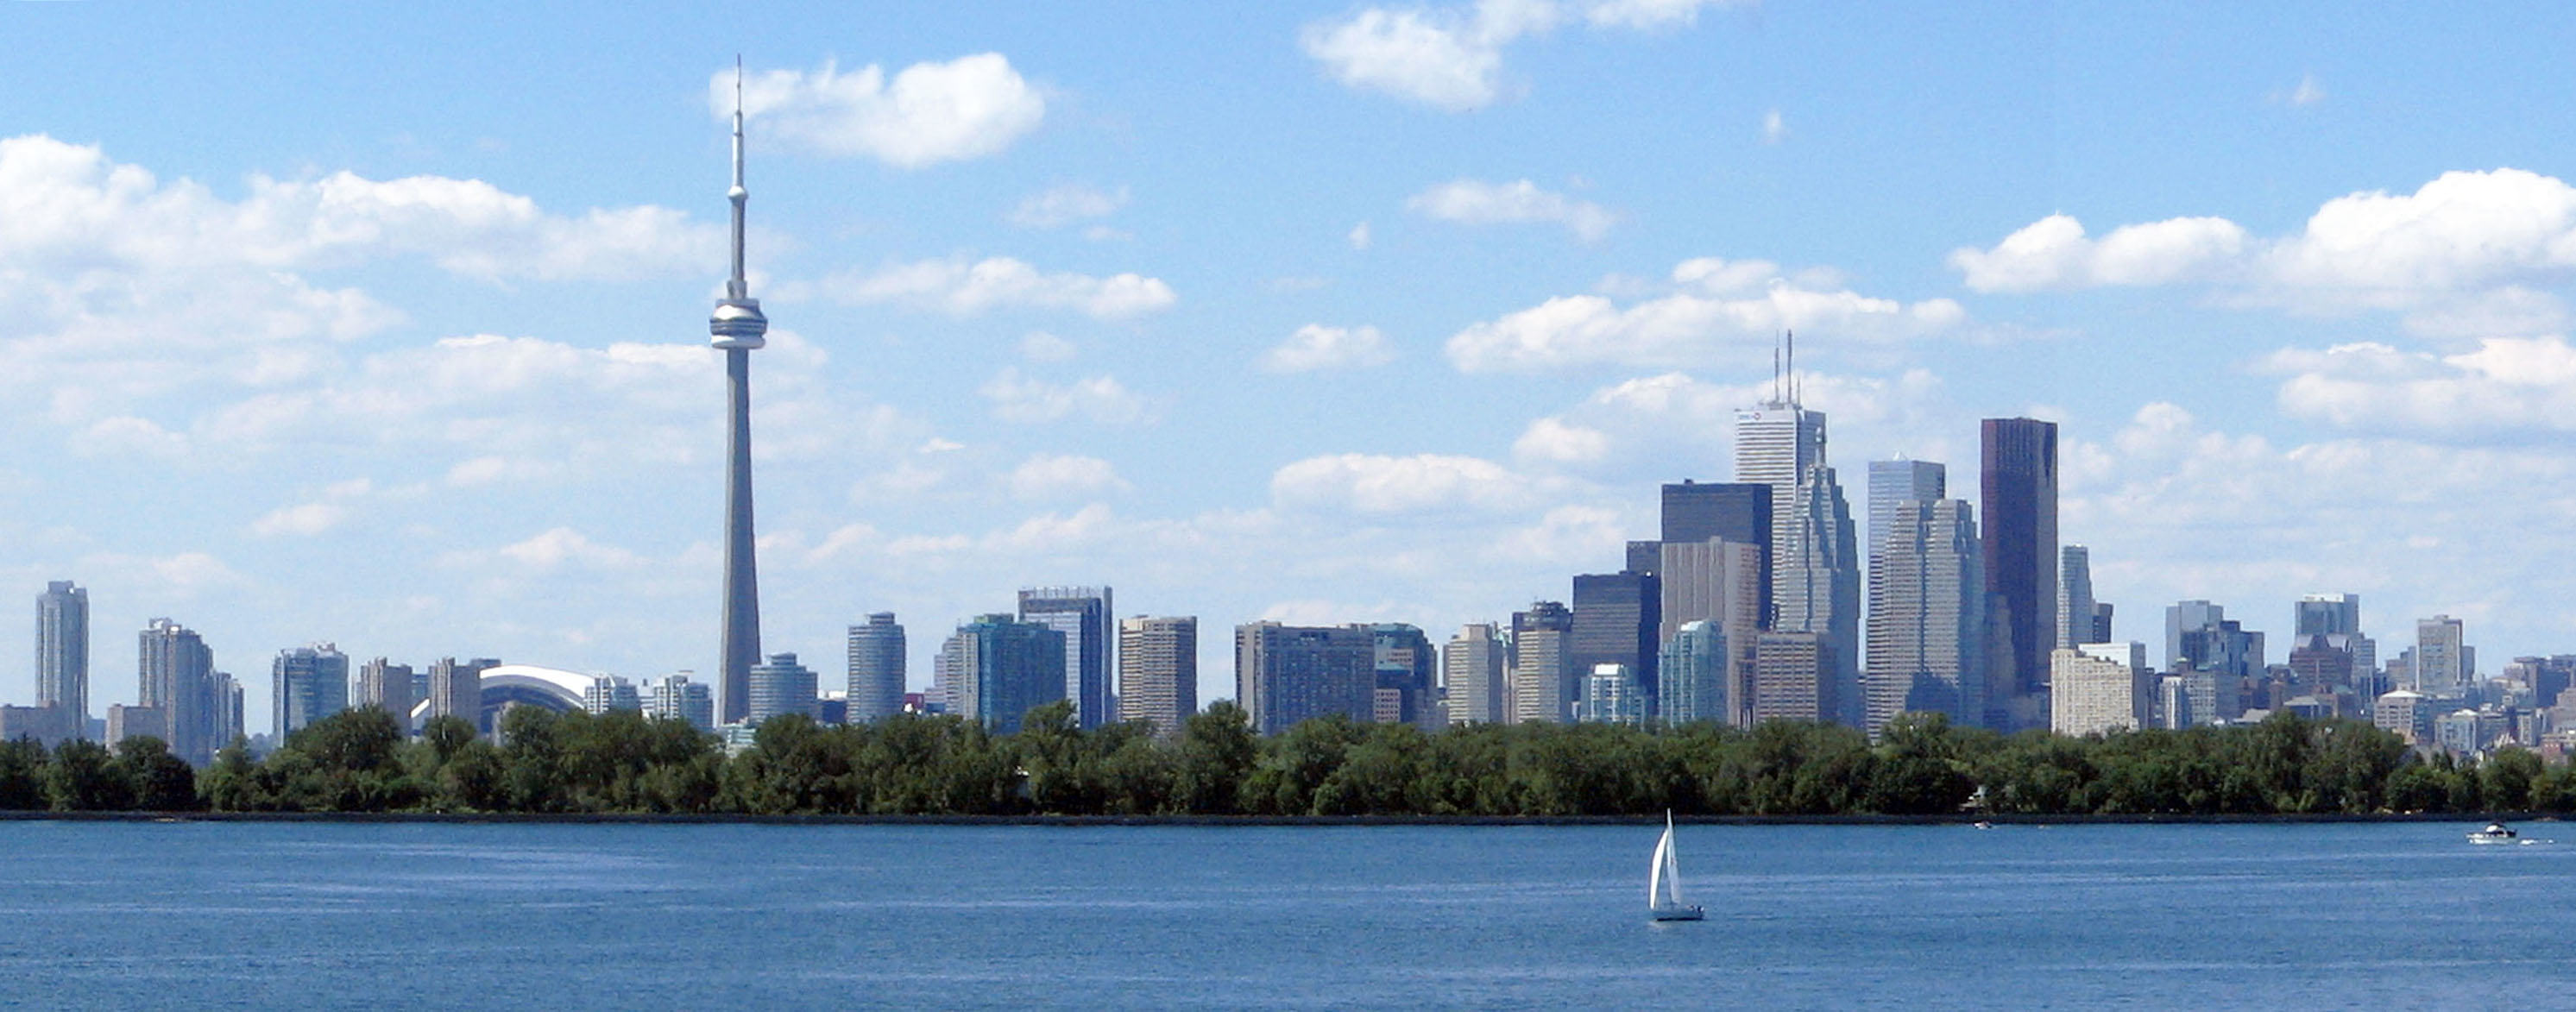 Toronto_skyline_tommythompsonpark_cropped